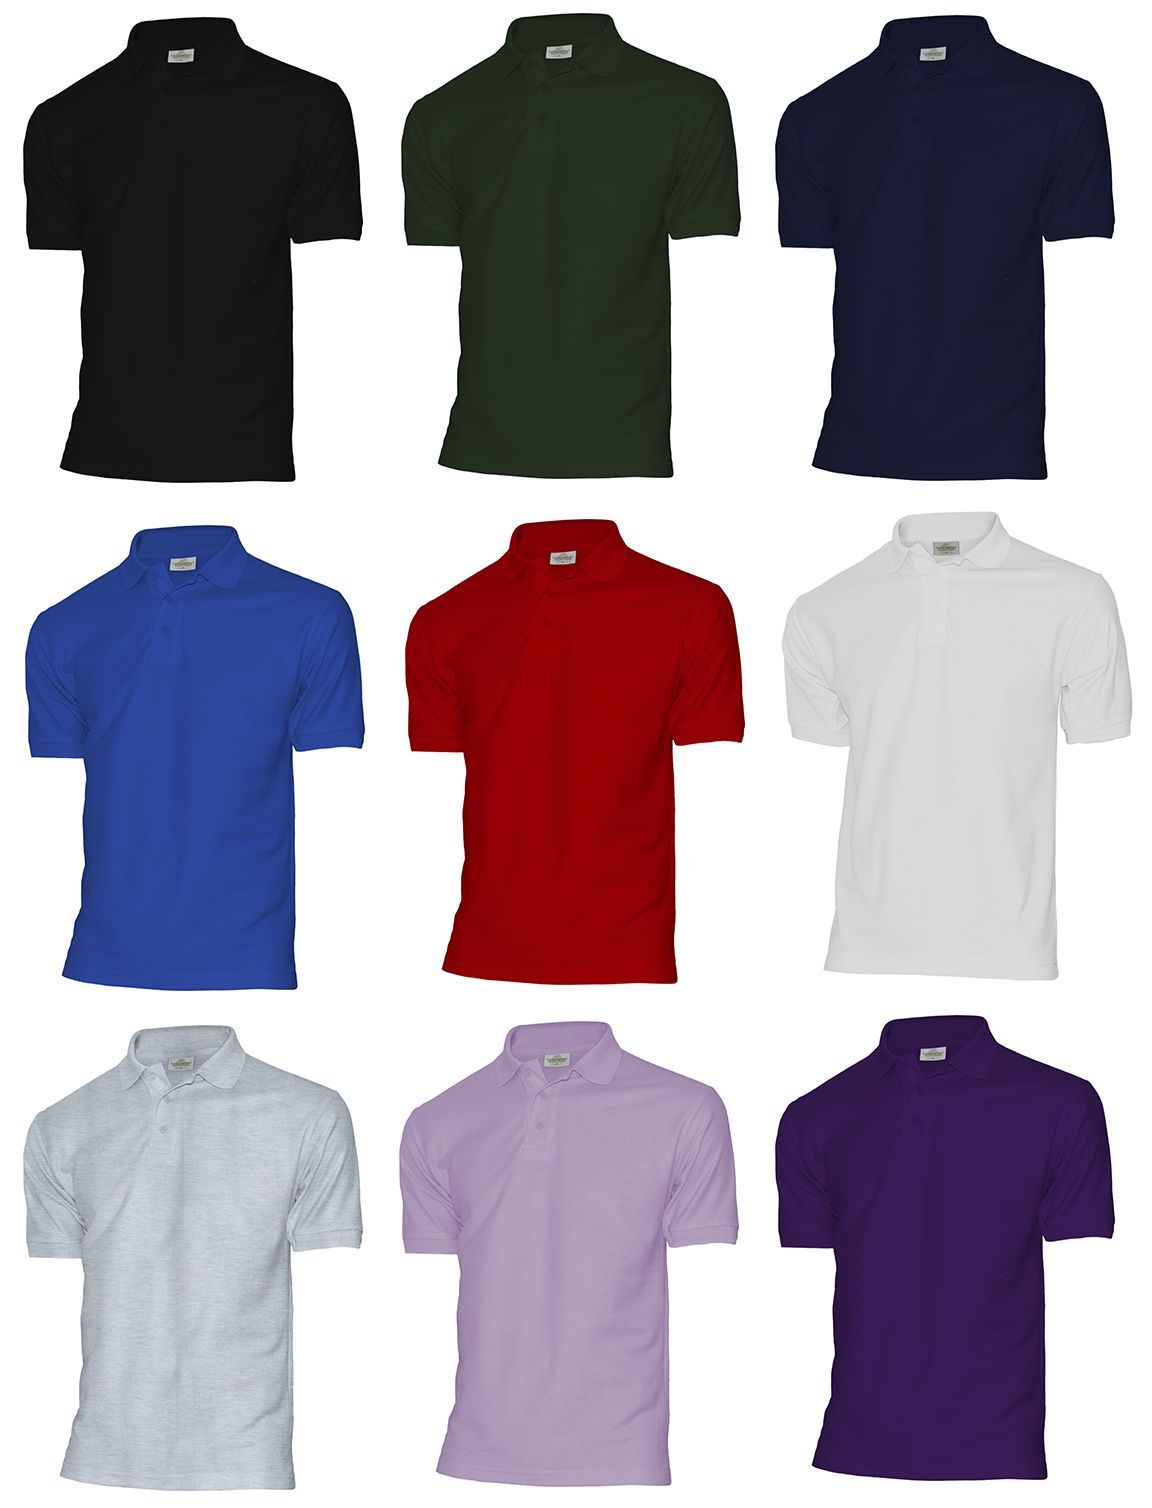 Mens Polo Shirt,Poly/Cotton,Heavy wieght (220gms), Size XS to XXXL, Free Postage